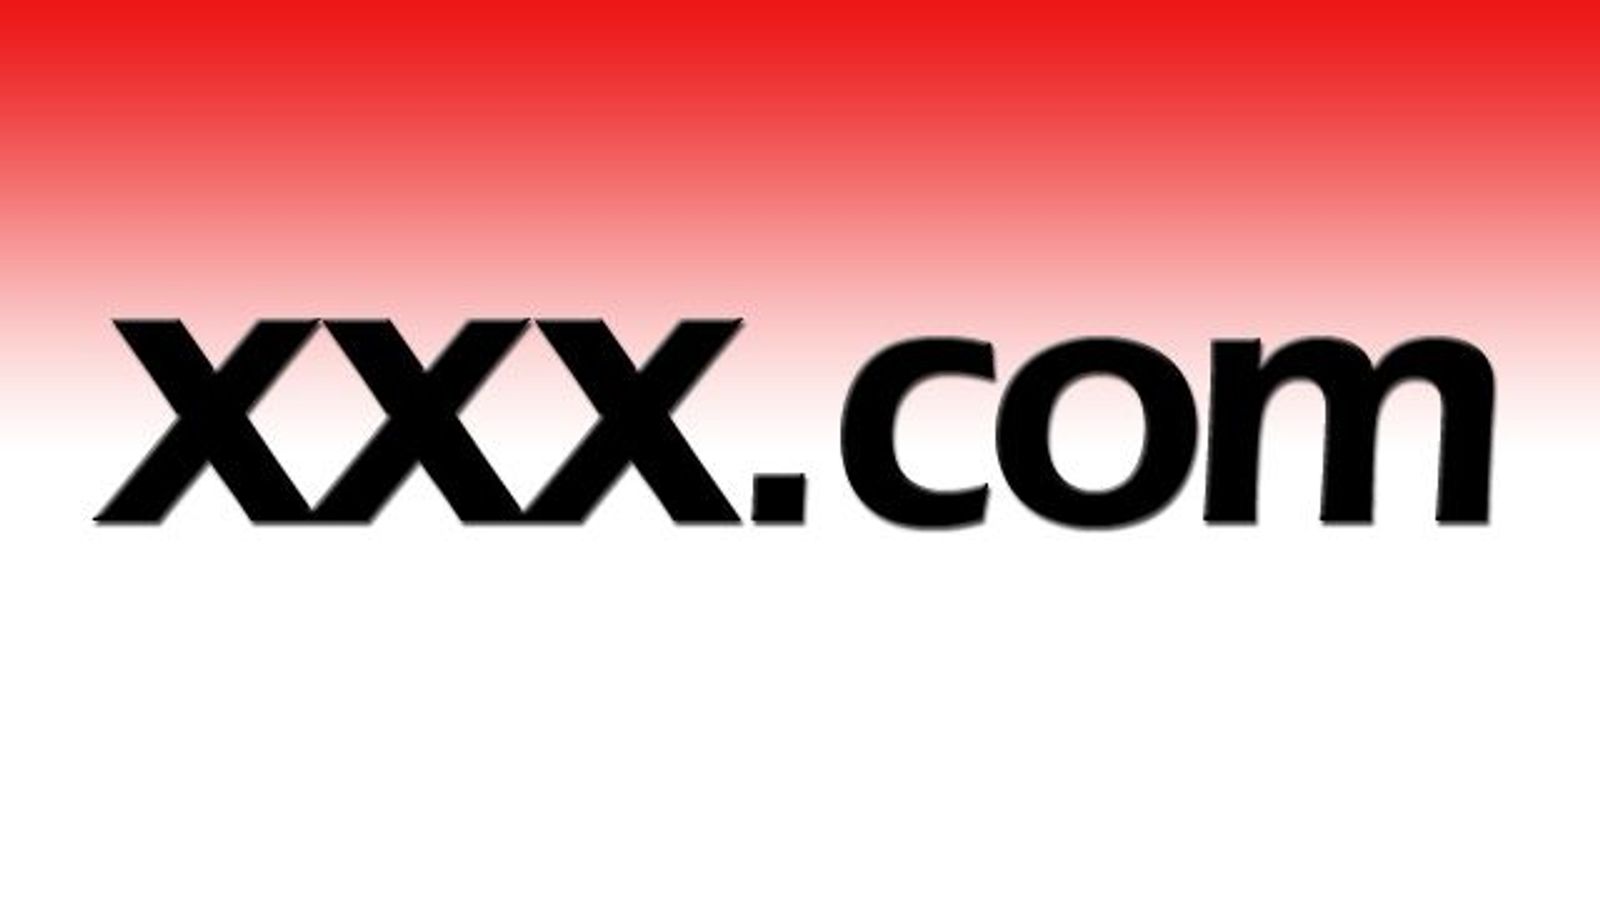 XXX.com Still on the Market Following DomainFest New York